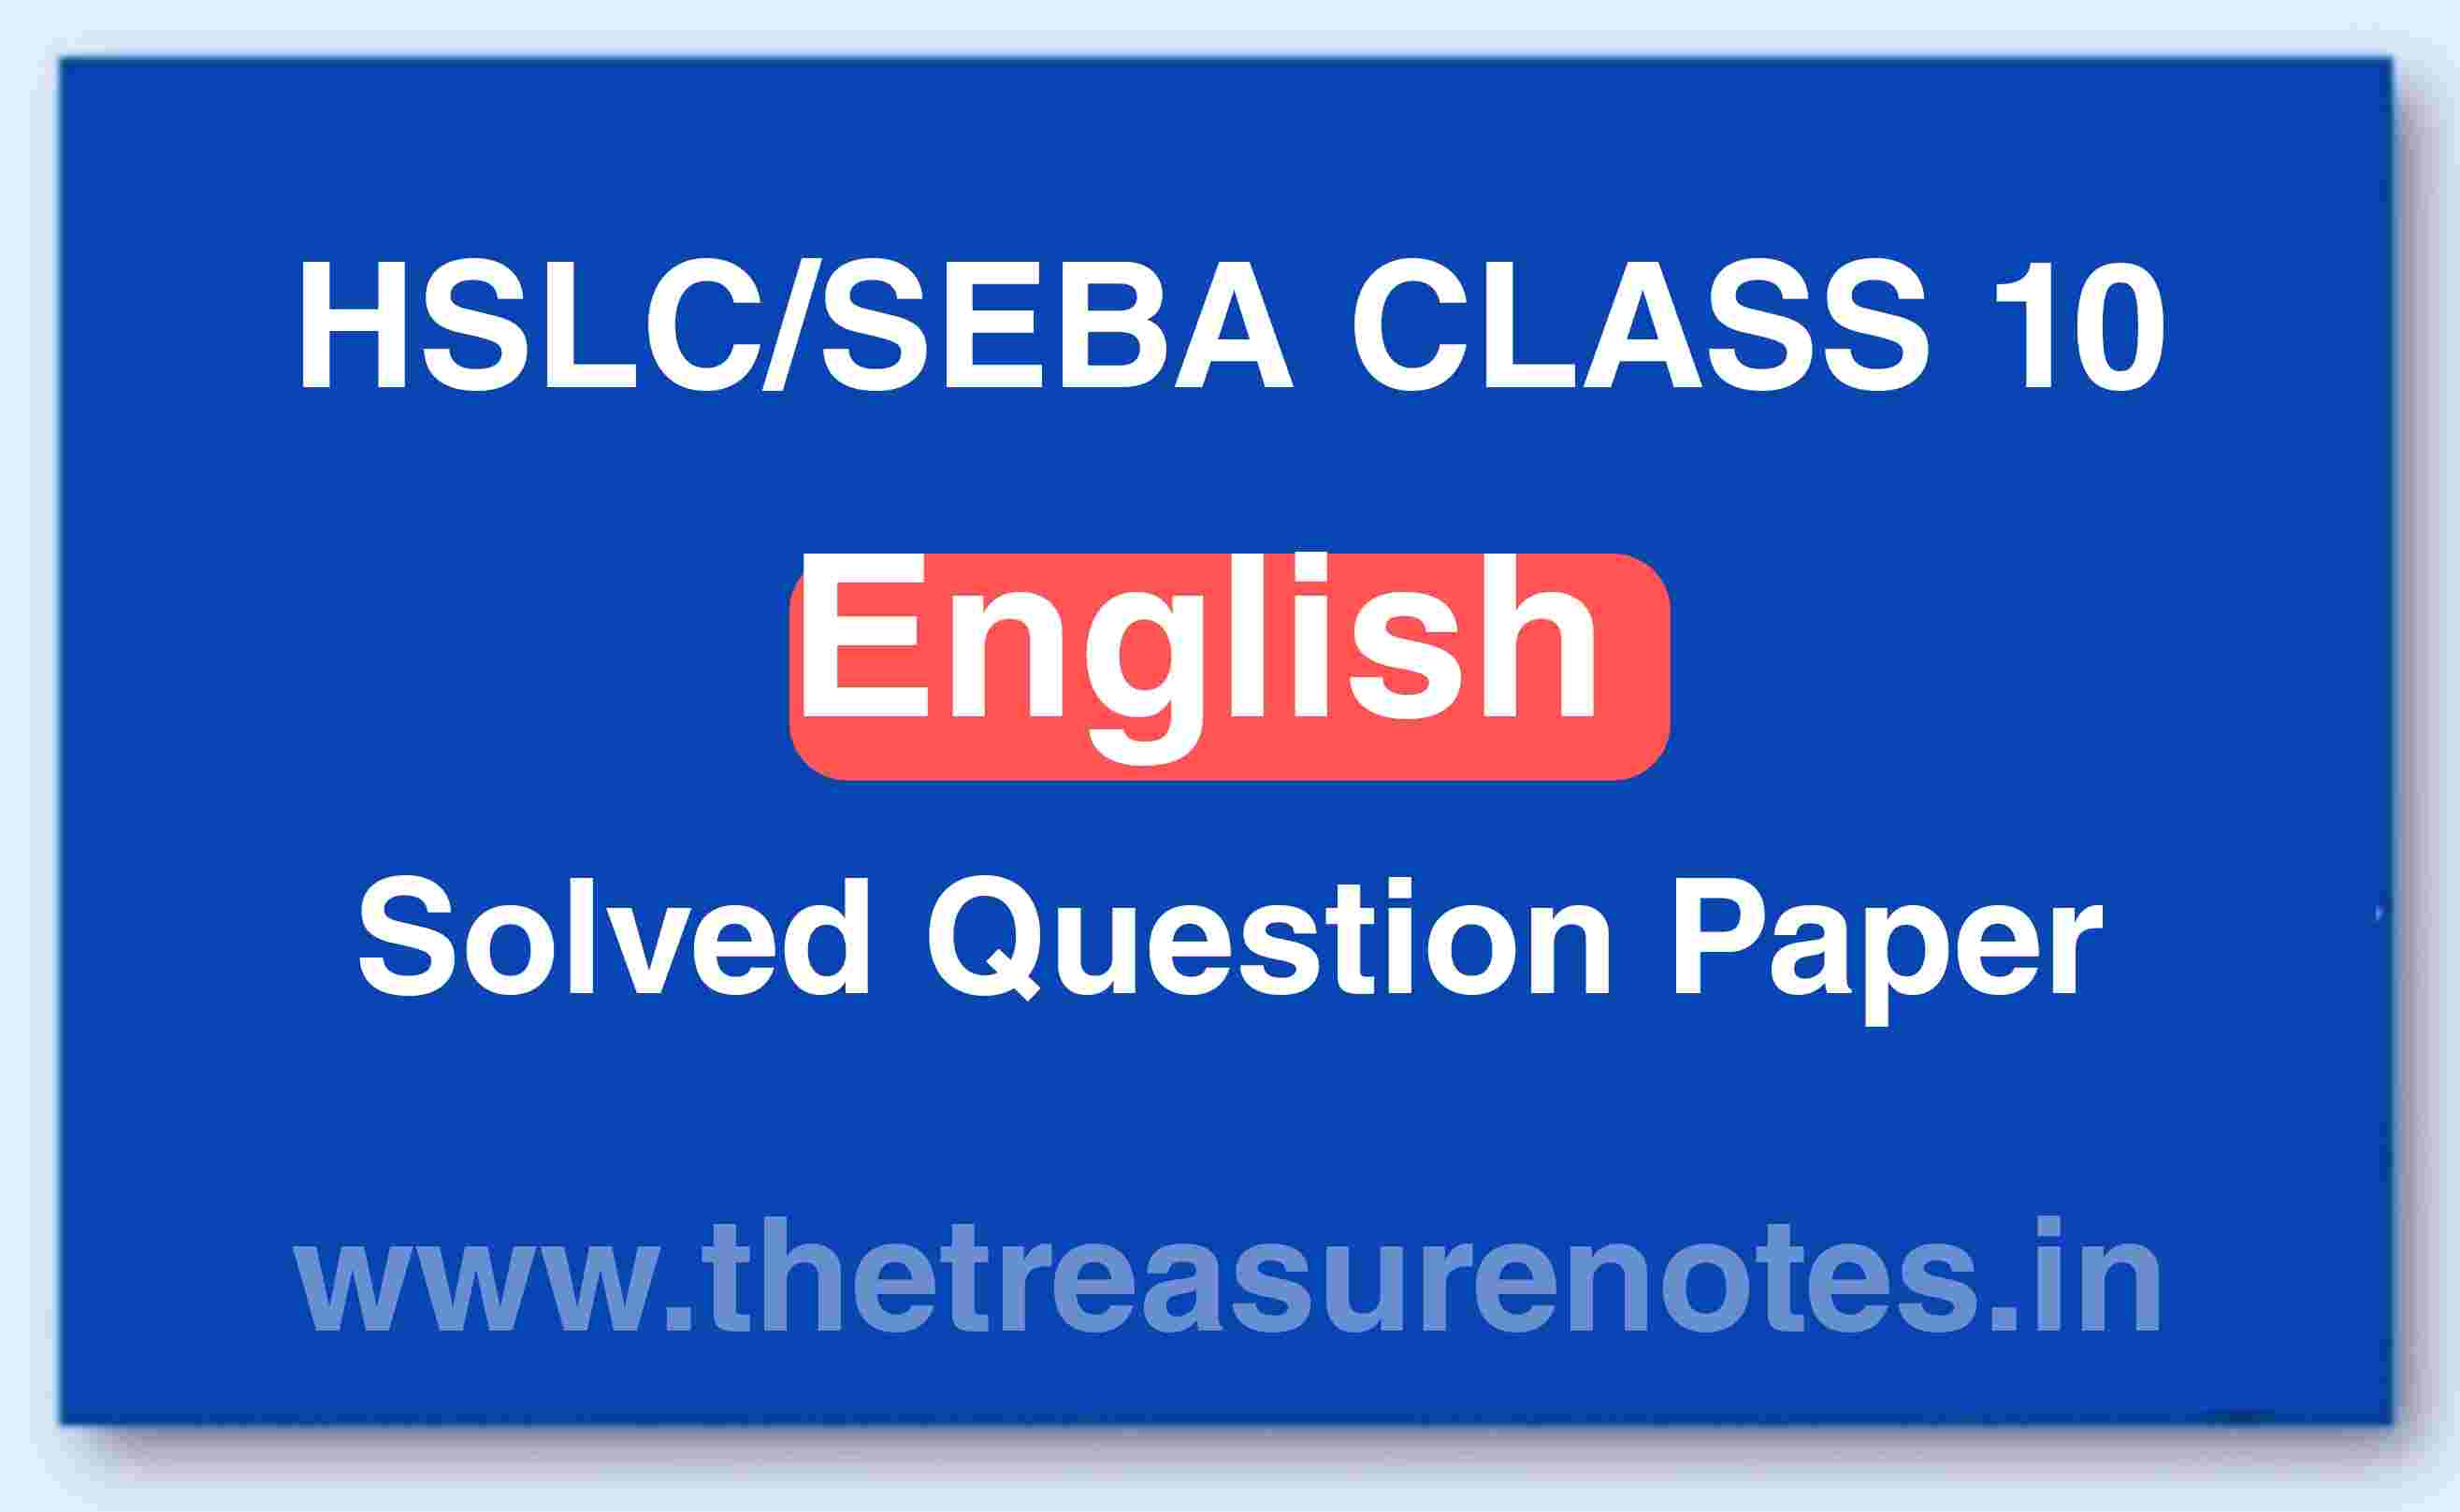 HSLC/SEBA Class 10 English Solved Question Paper 2017